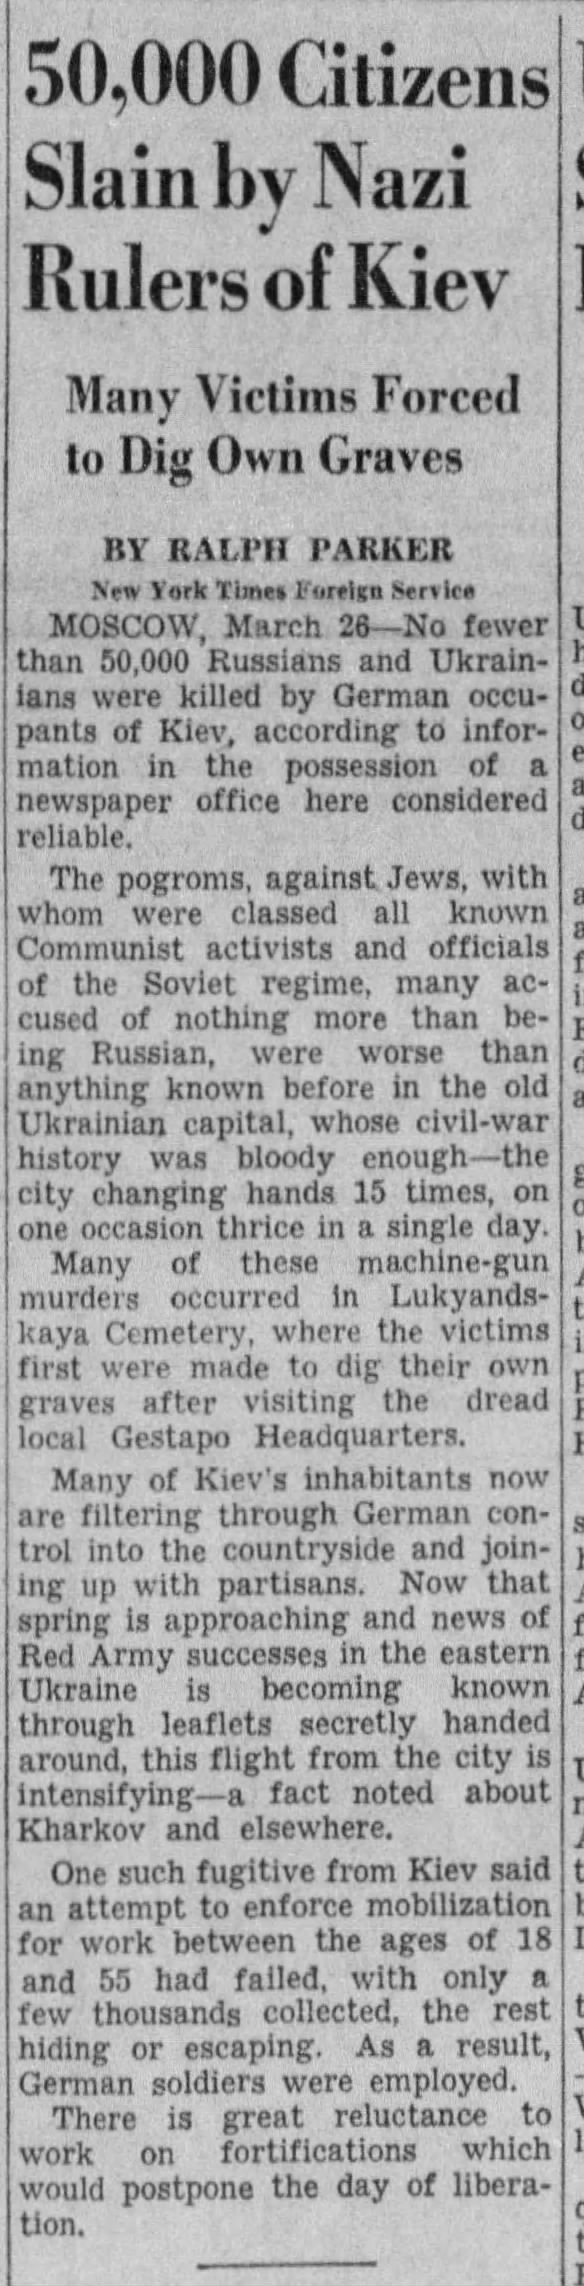 50,000 Citizens Slain by Nazi Rulers of Kiev